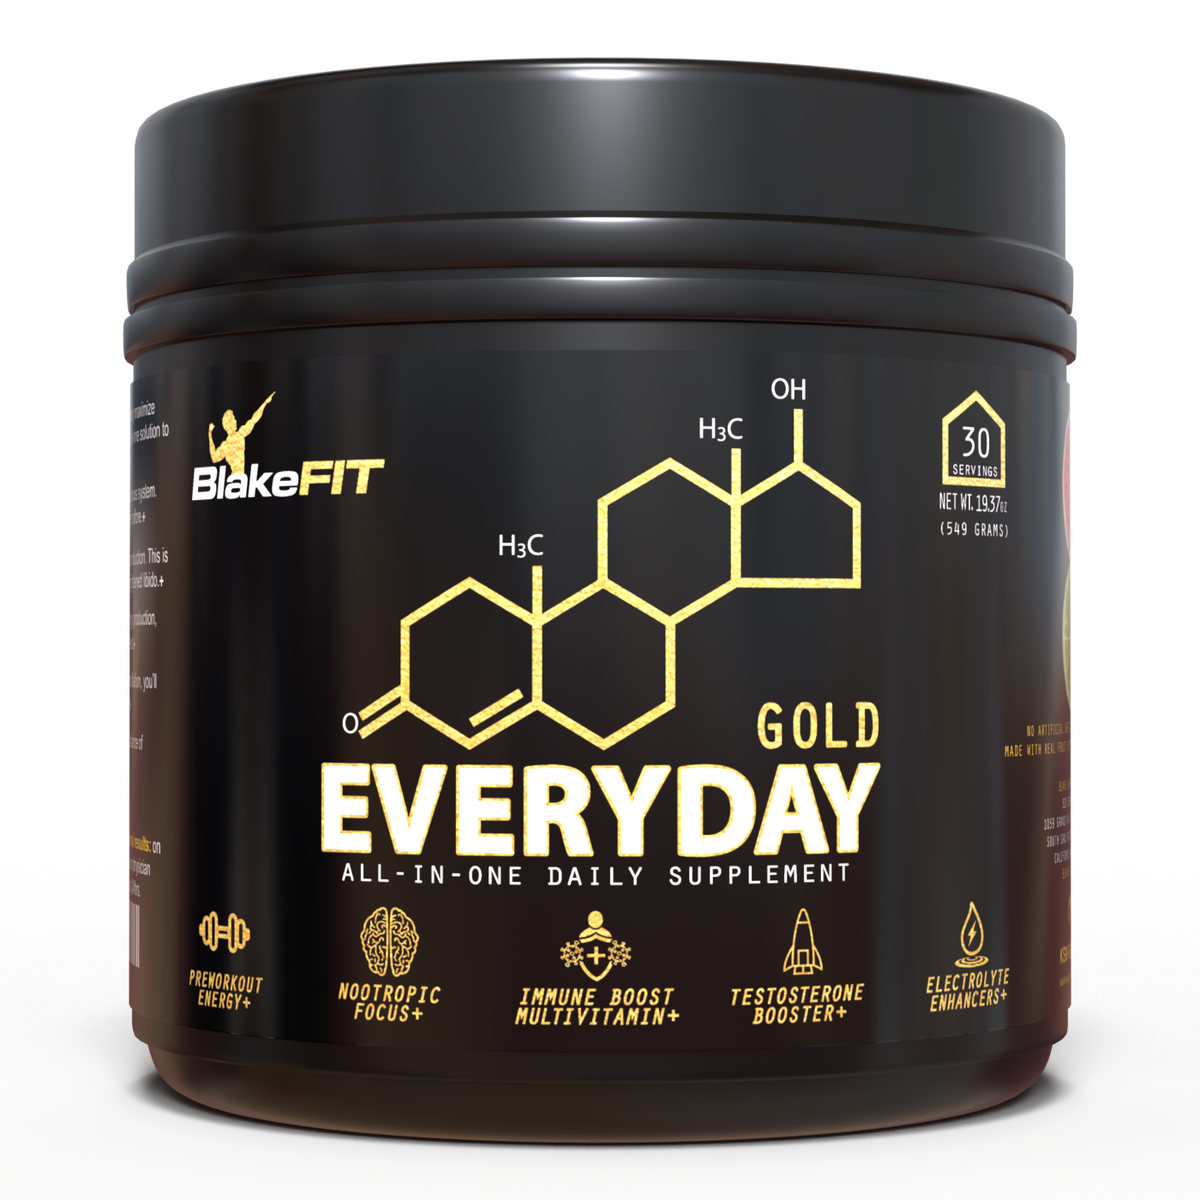 3-Pack Everyday Gold All-in-one Supplement Powder | Raspberry Lemon | Immune Boost Multivitamin | Preworkout | Electrolytes | Nootropics | Keto-Friendly | Vegan Certified